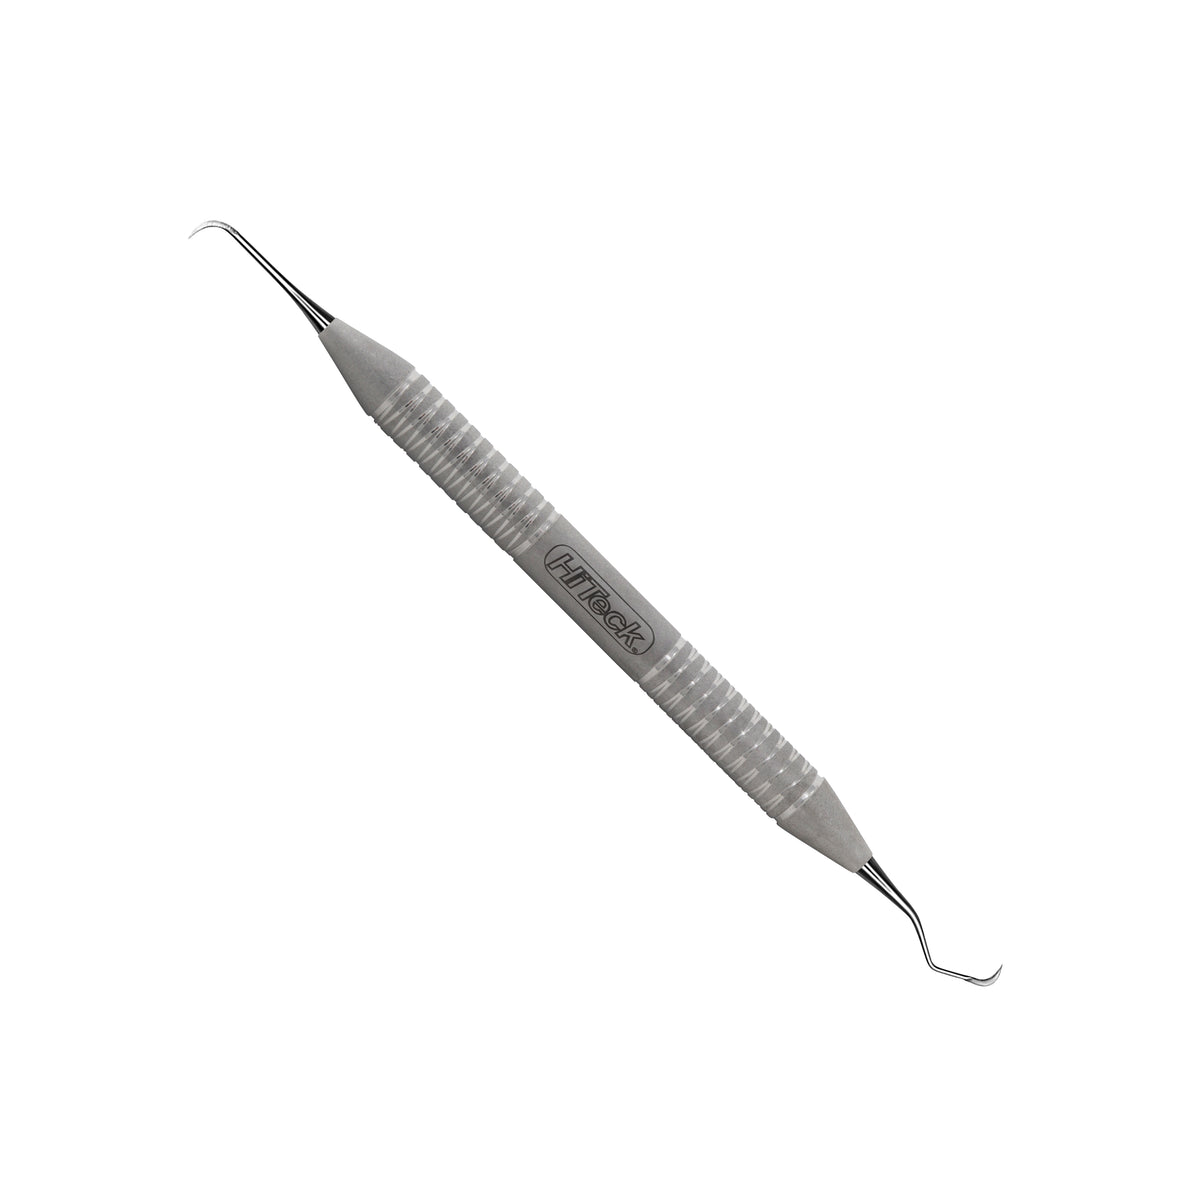 11S/12S Sugarman Periodontal Surgical Curette - HiTeck Medical Instruments